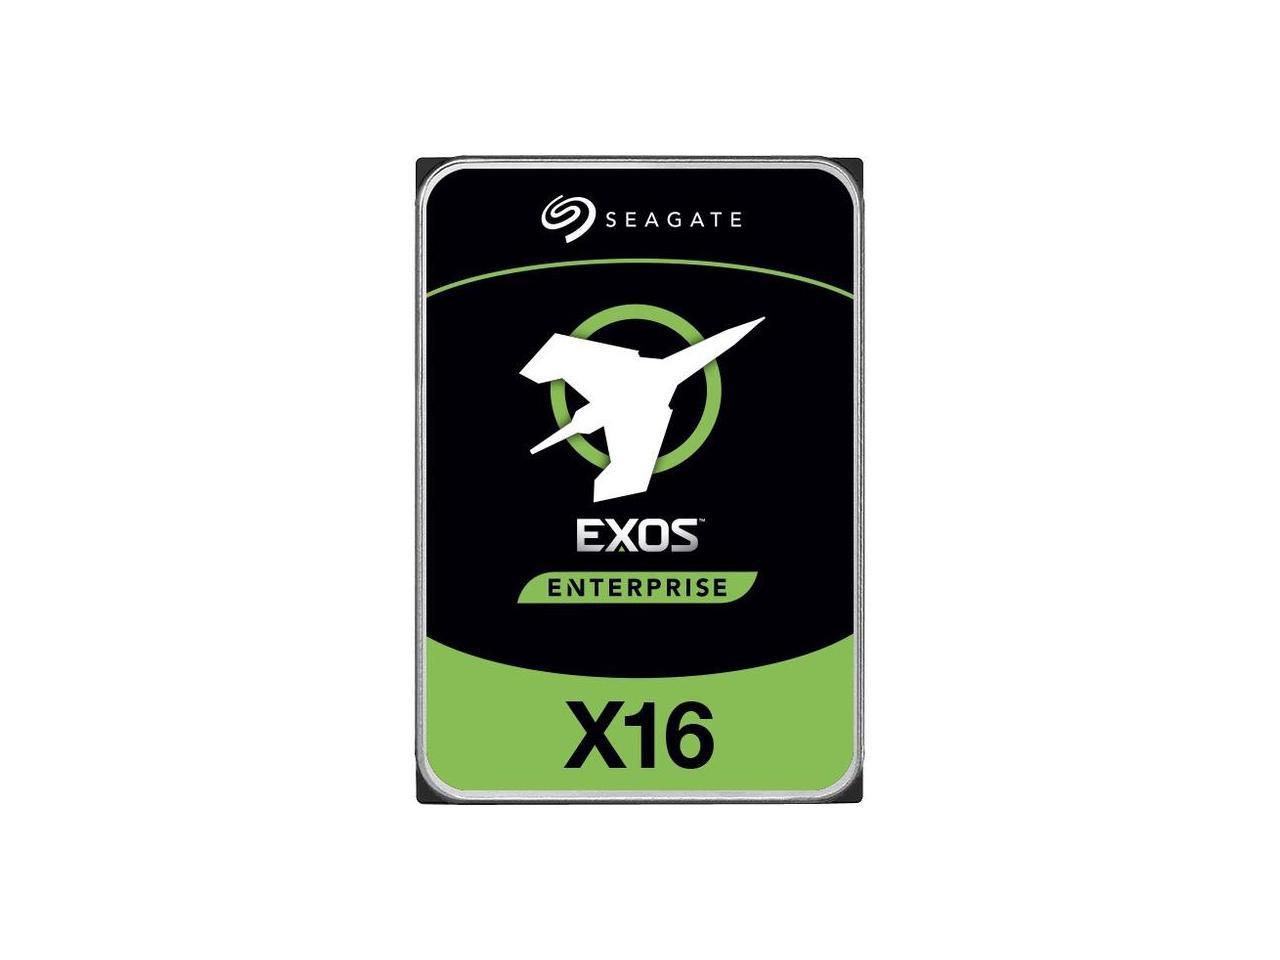 Seagate Exos X16 14TB 7200 RPM SATA Enterprise Hard Drive $175.99 at Newegg